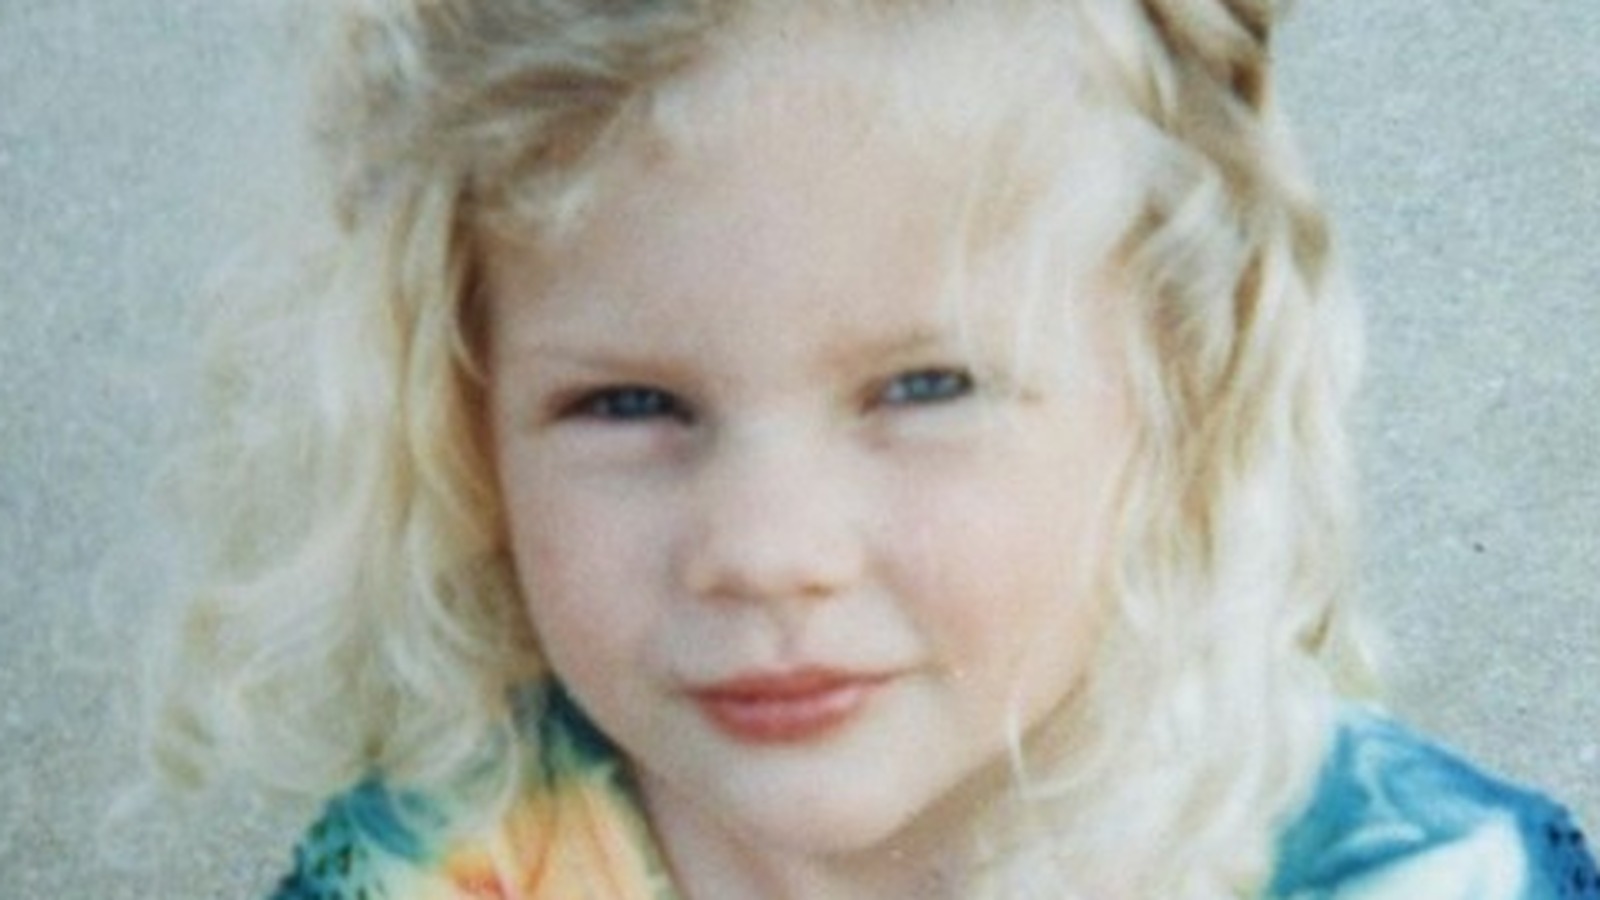  Taylor Swift Baby